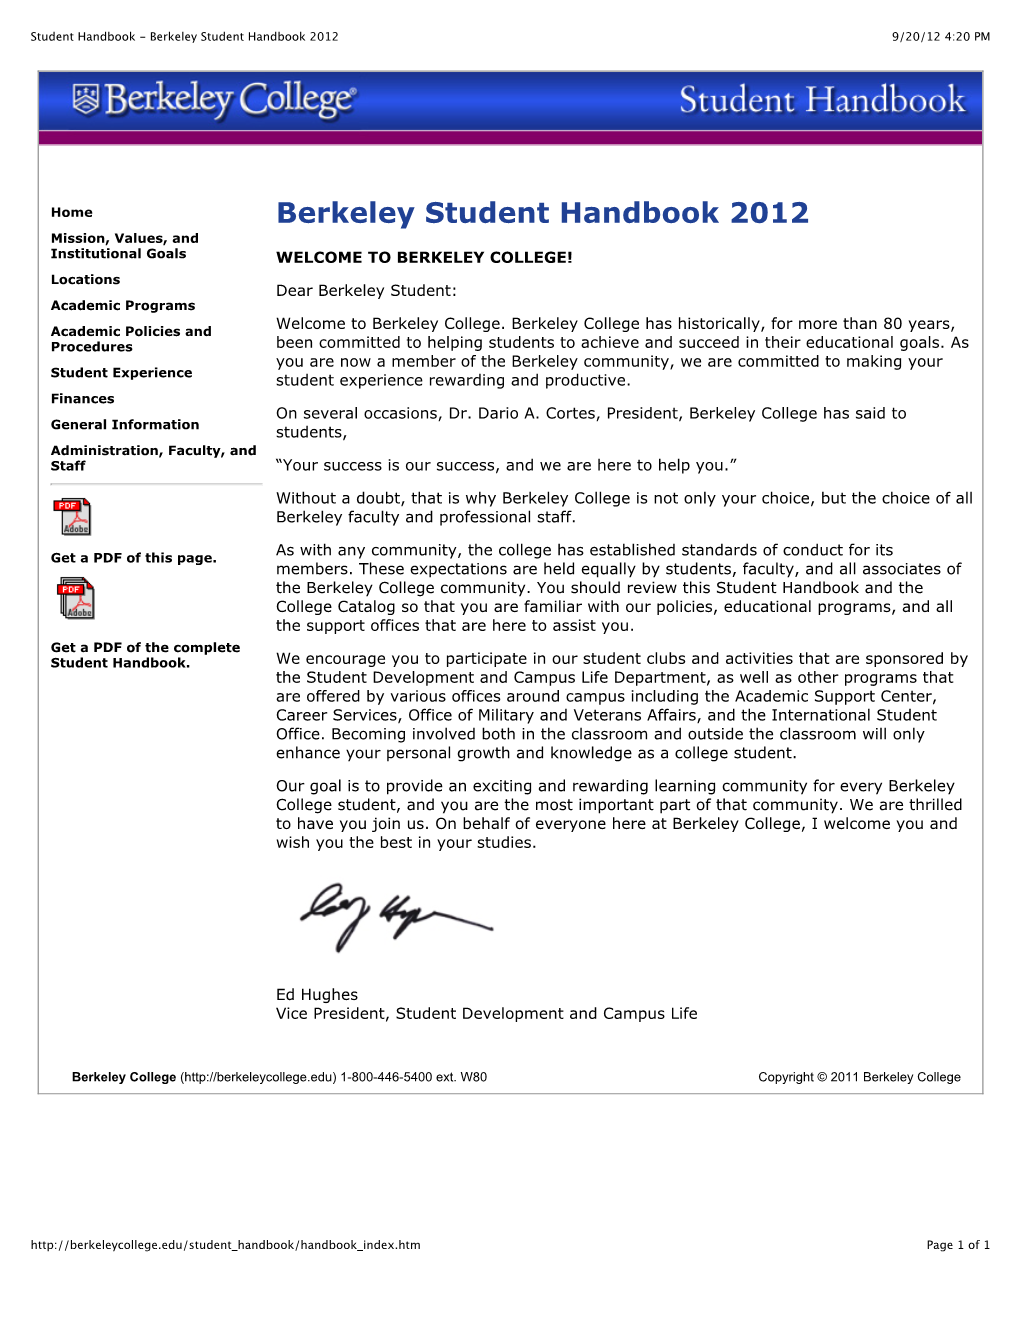 Student Handbook - Berkeley Student Handbook 2012 9/20/12 4:20 PM